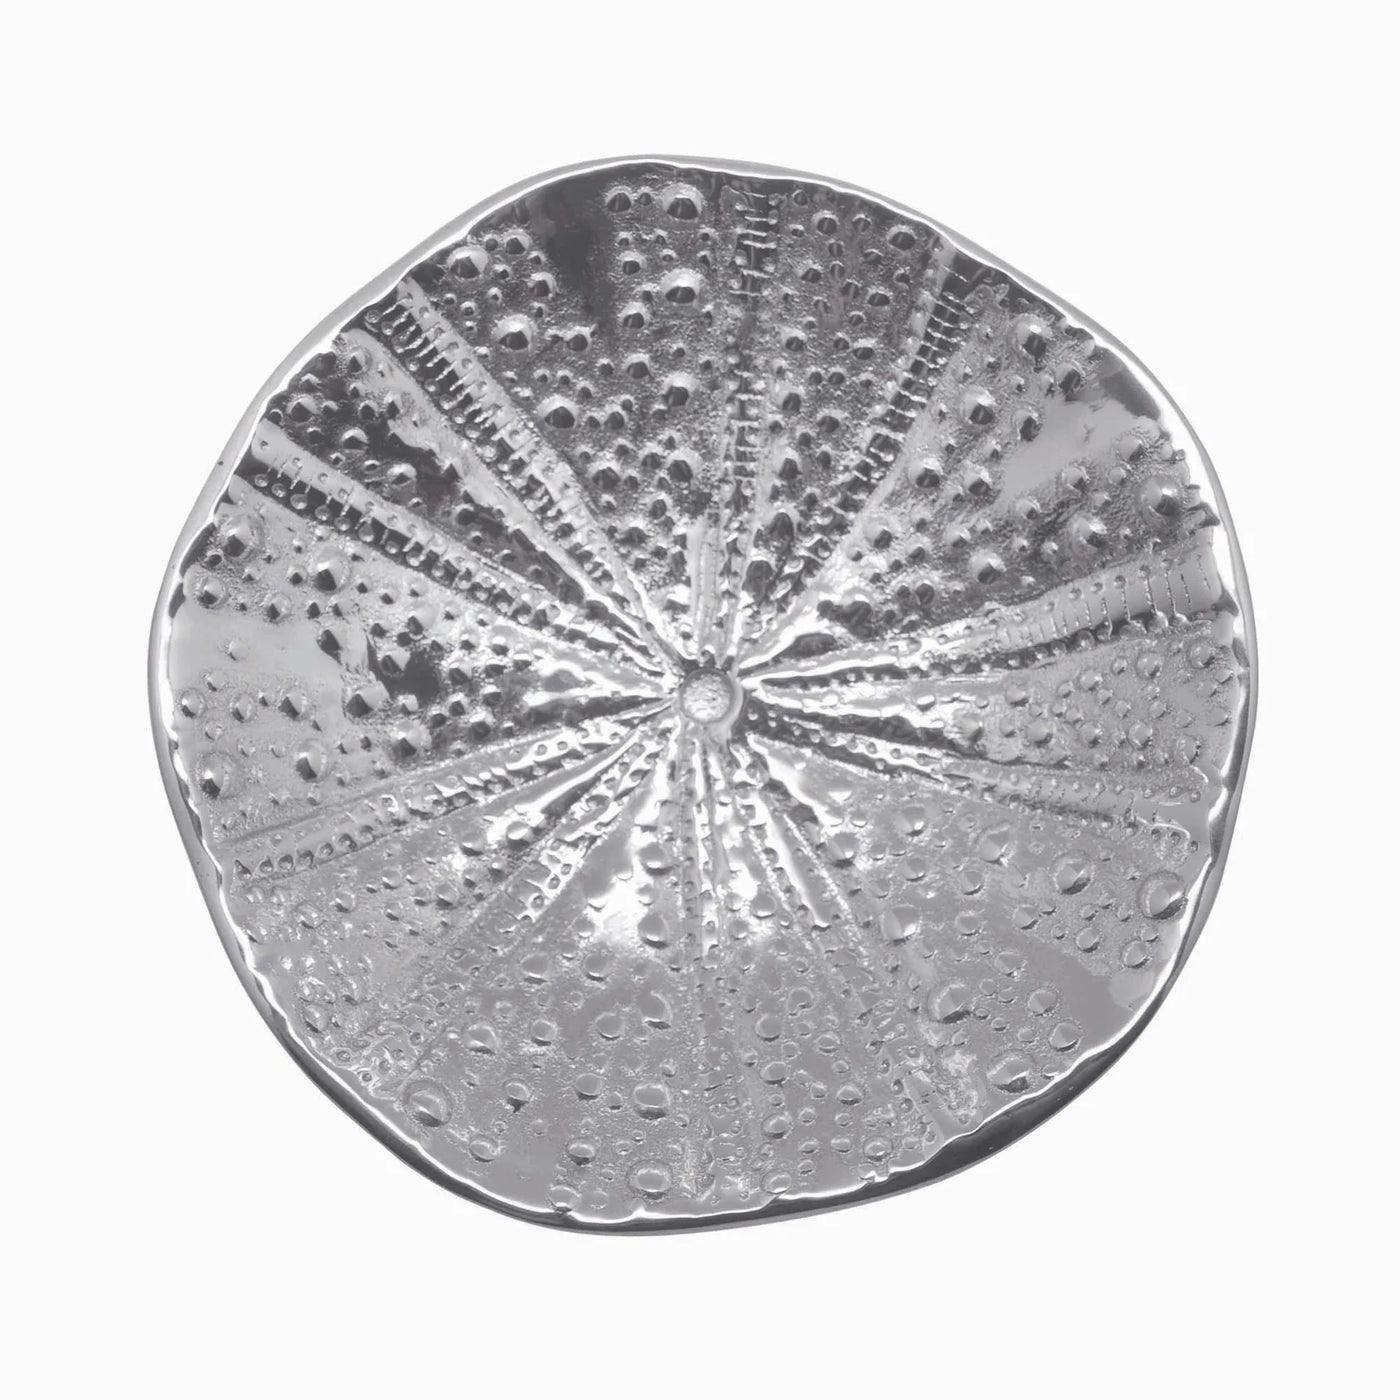 Sea Urchin Ceramic Canape Plate with Coral Spoon